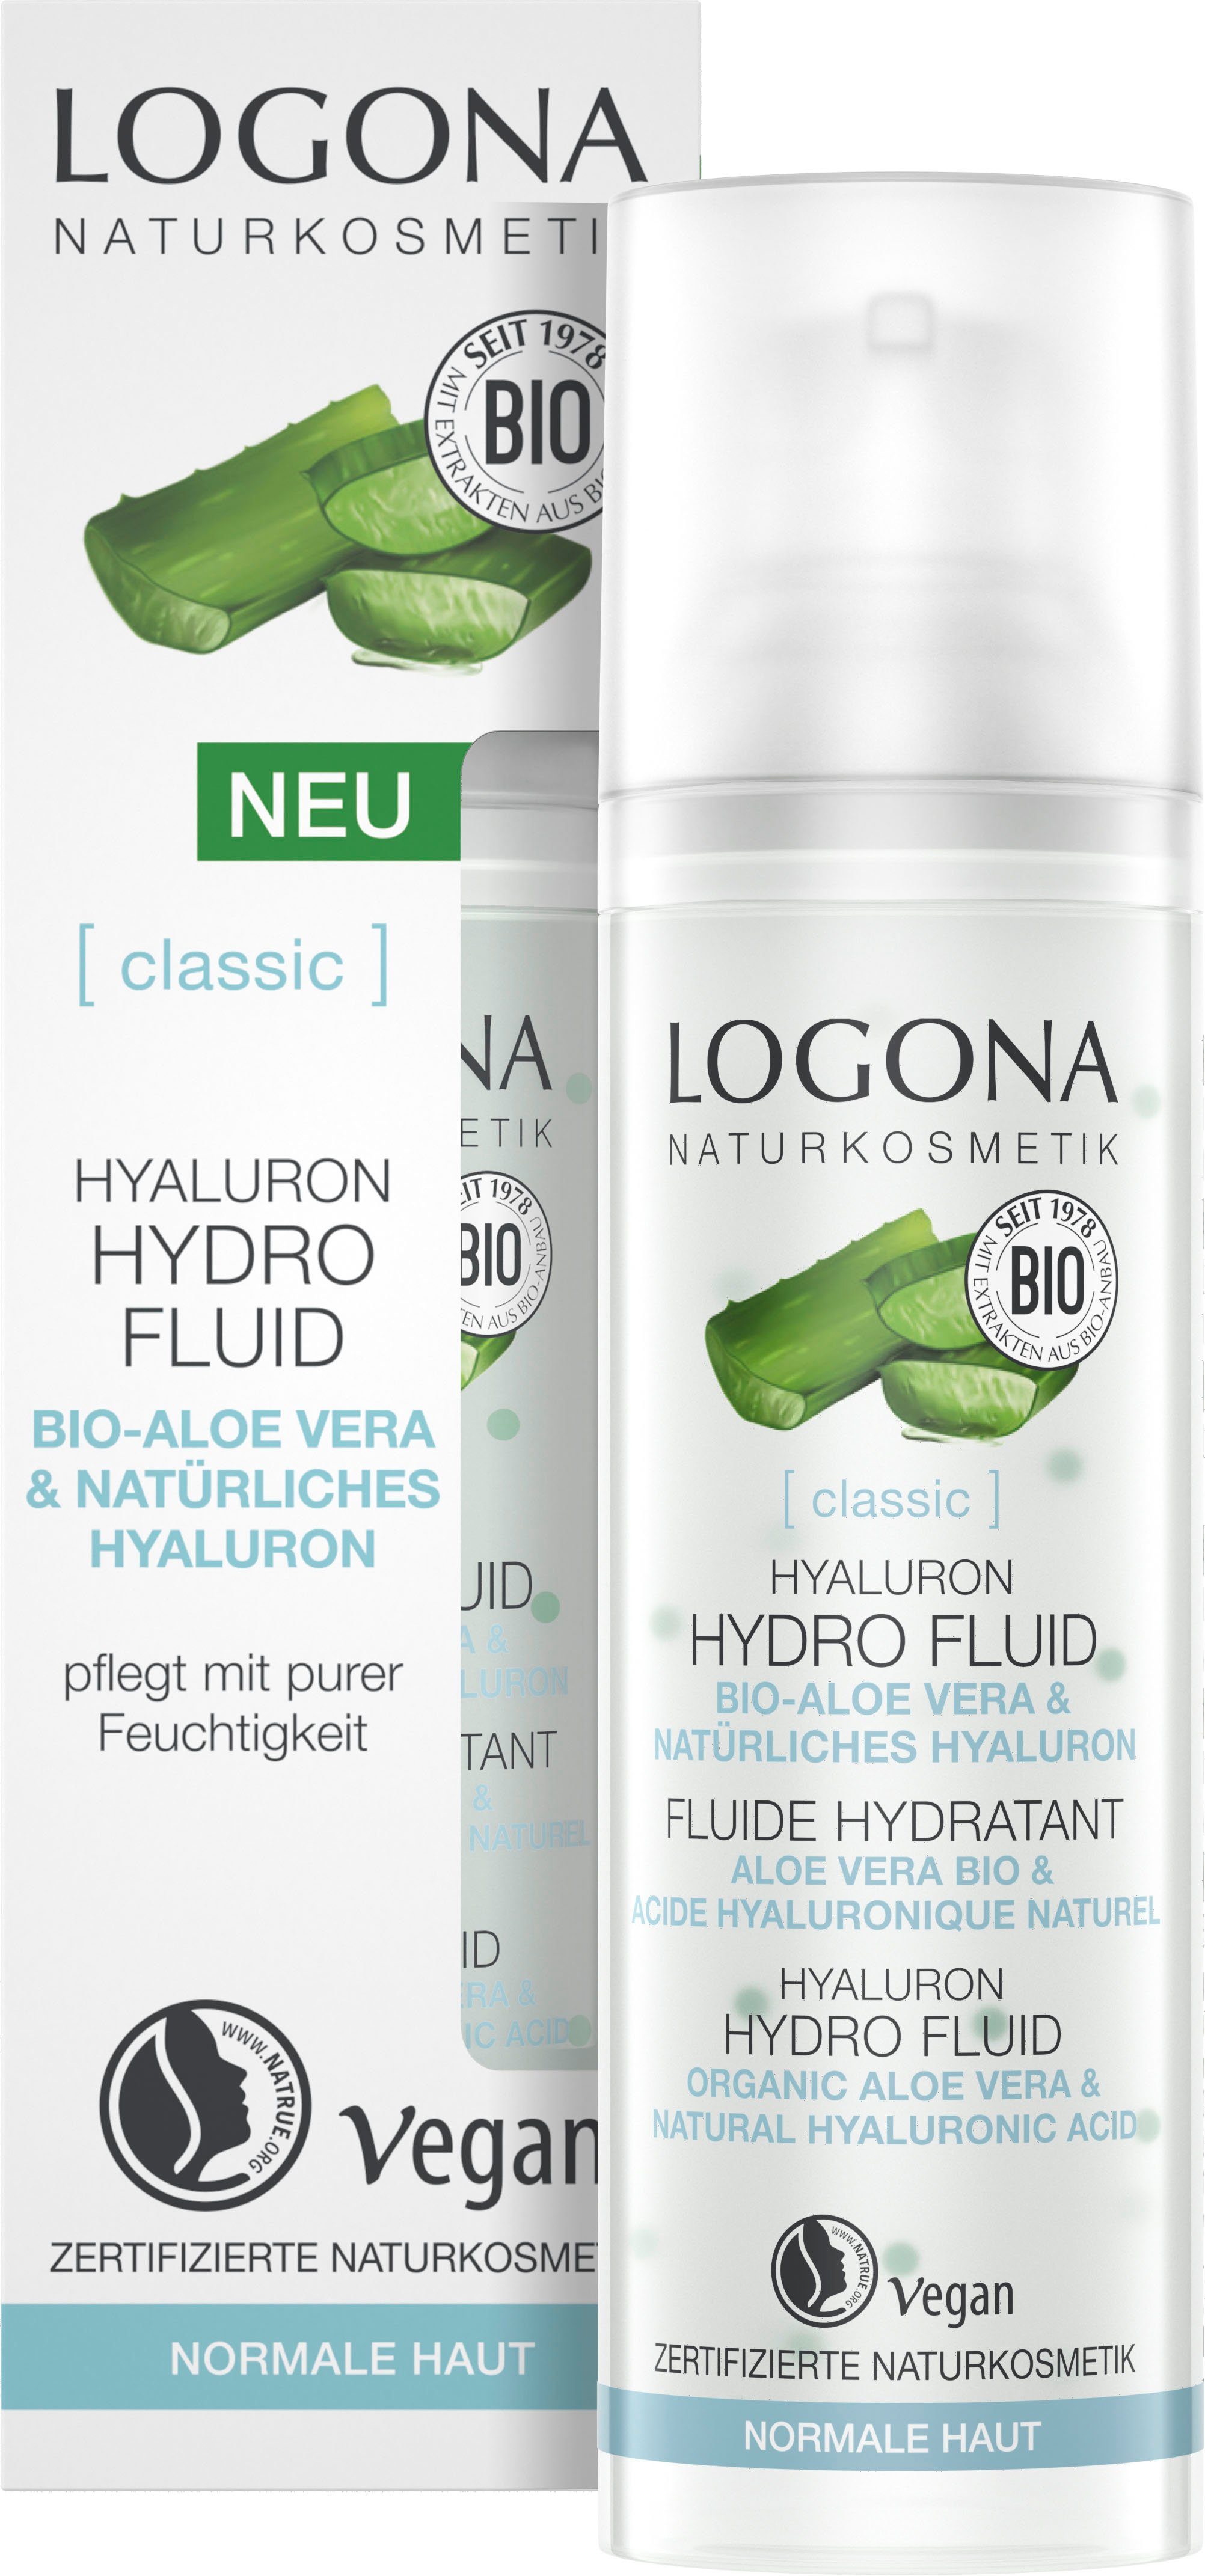 LOGONA Gesichtsfluid Hydro Fluid Logona Hyaluron [classic